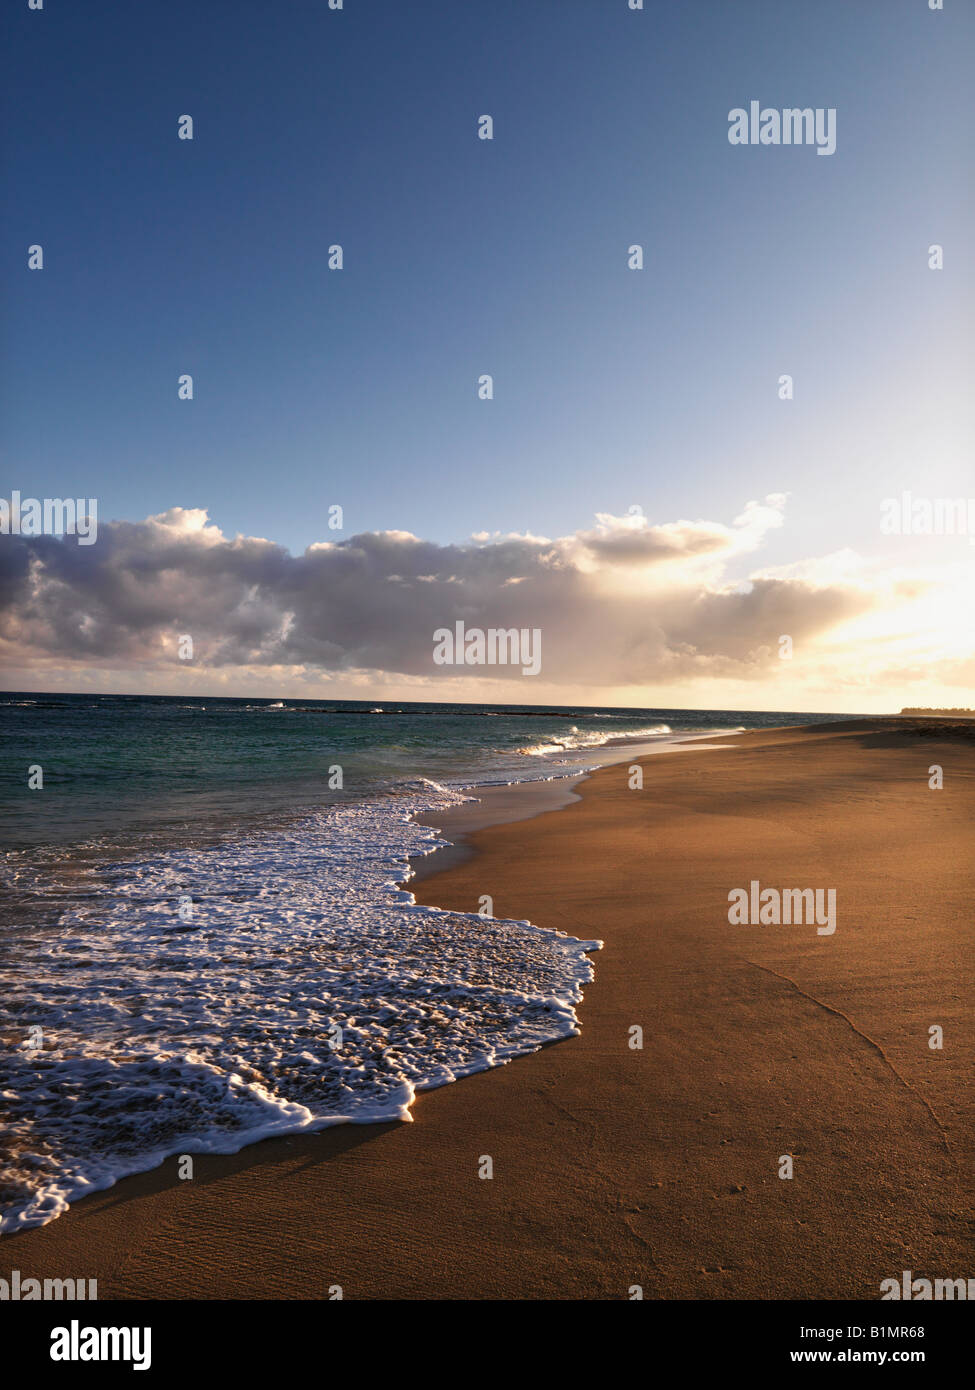 The beach at dusk in Maui Hawaii Stock Photo